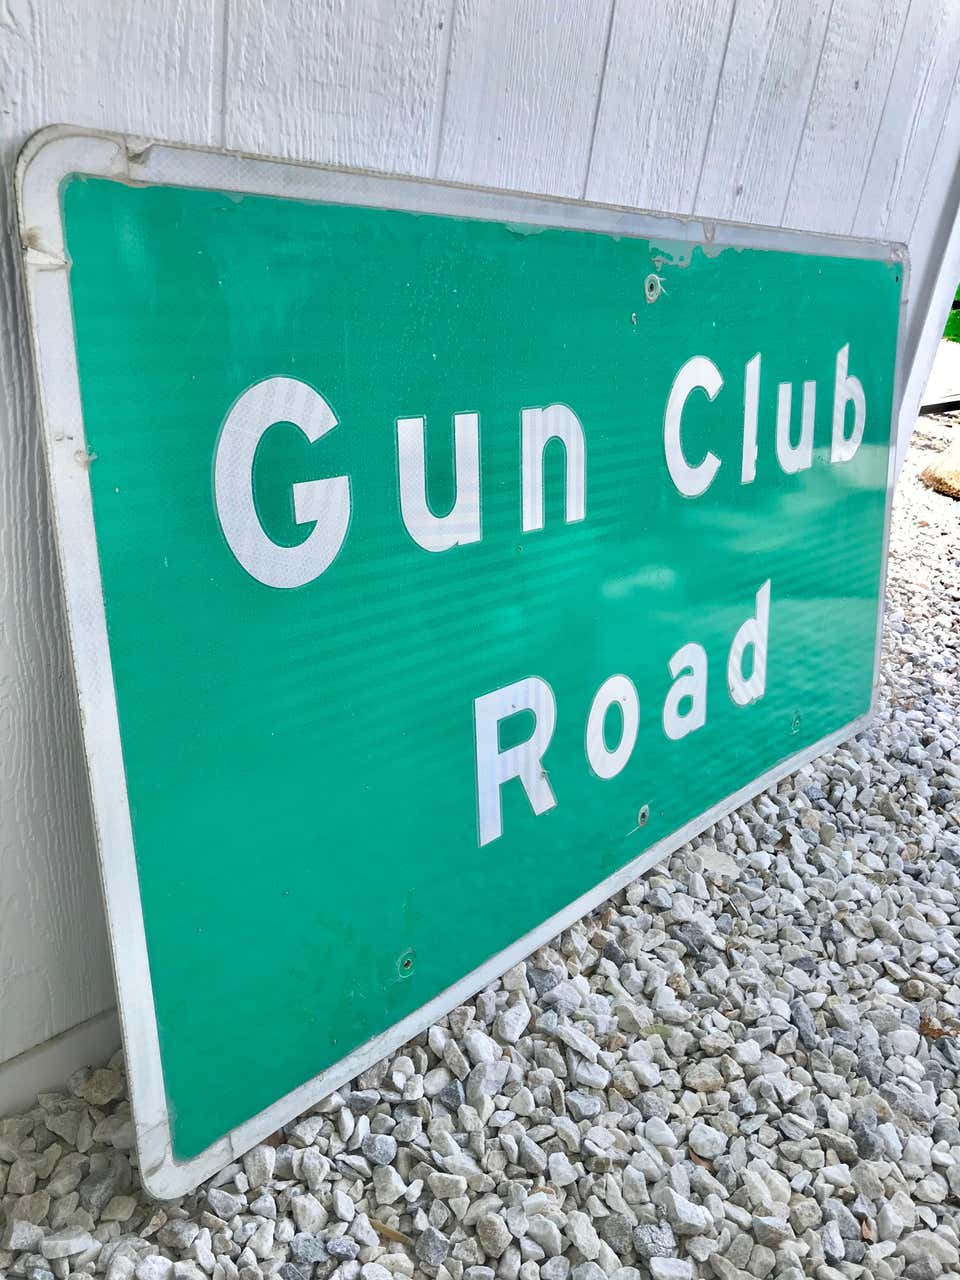 Large Vintage California Gun Club Road Sign